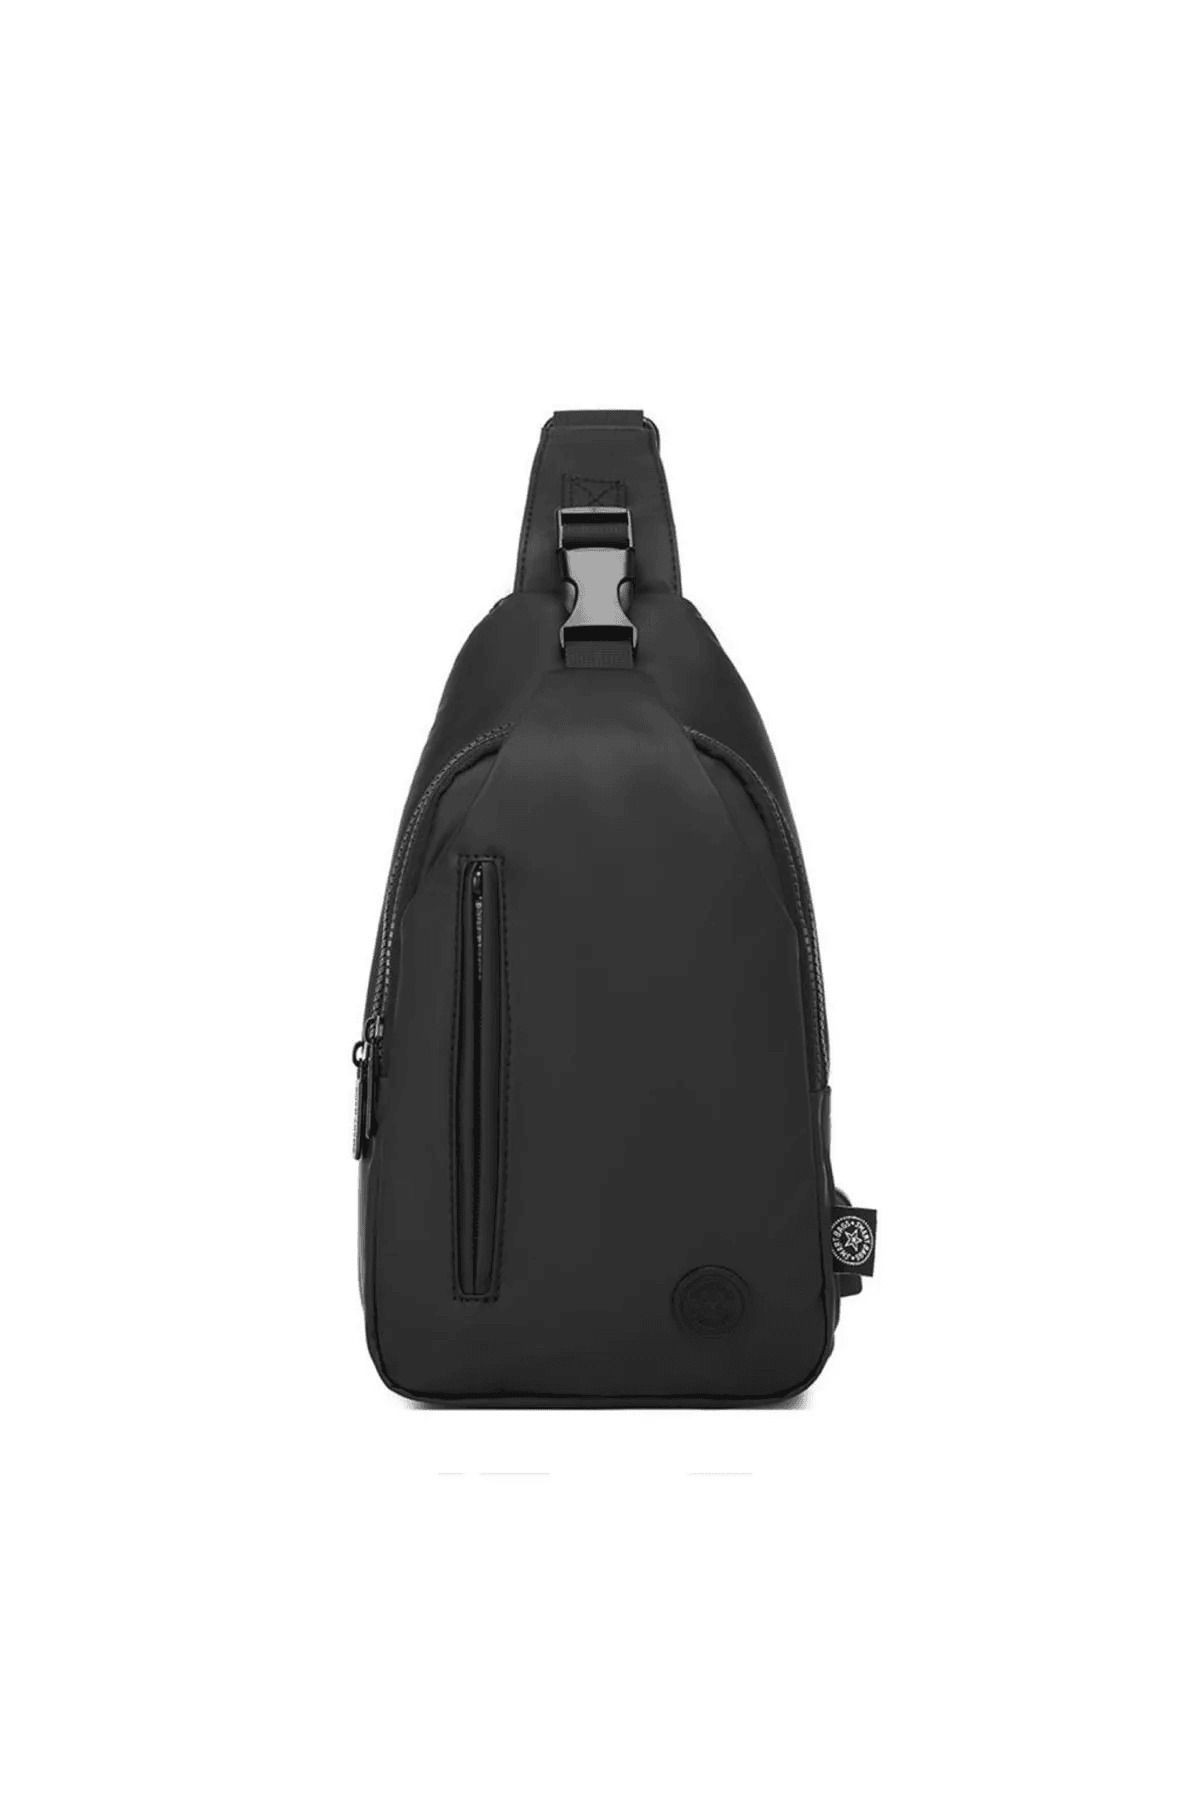 Smart Bags SB8654